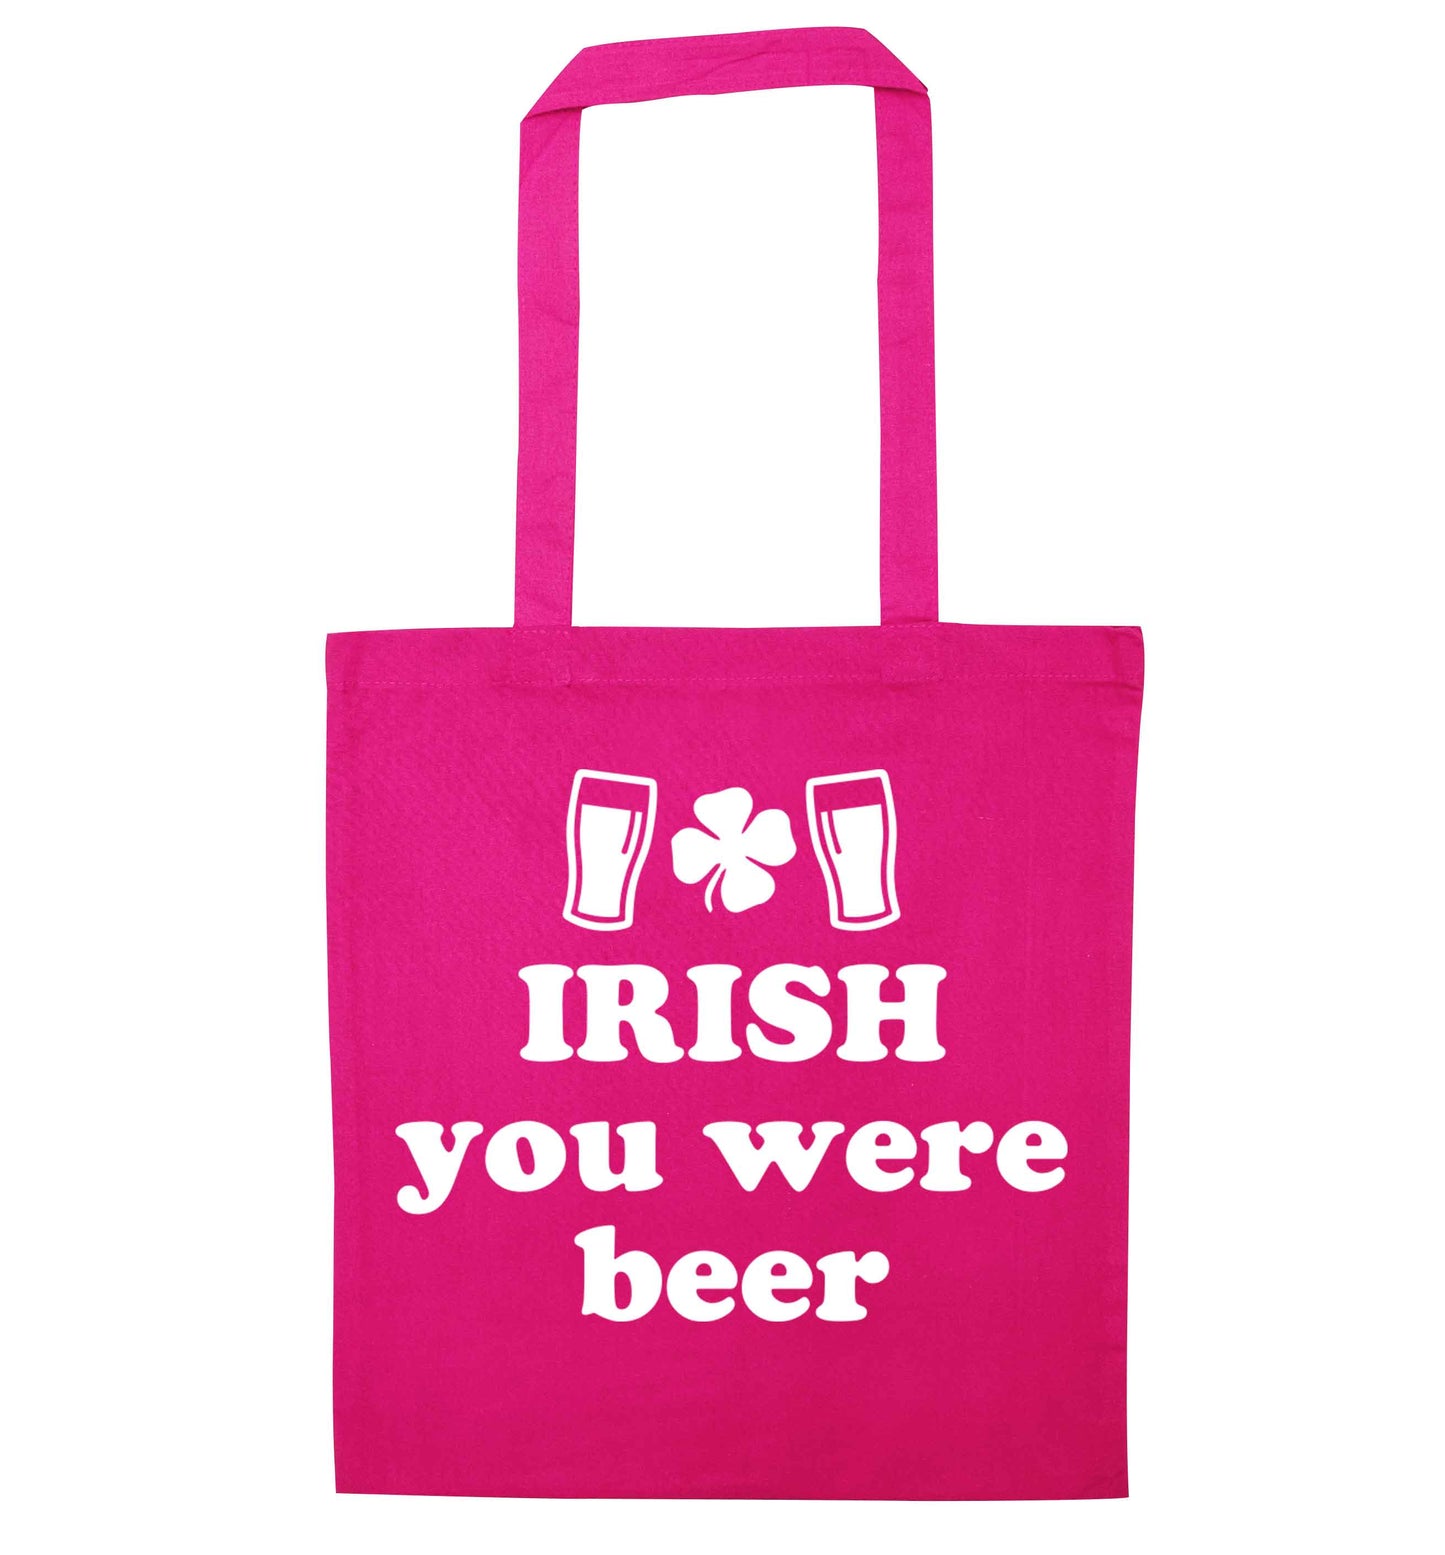 Irish you were beer pink tote bag